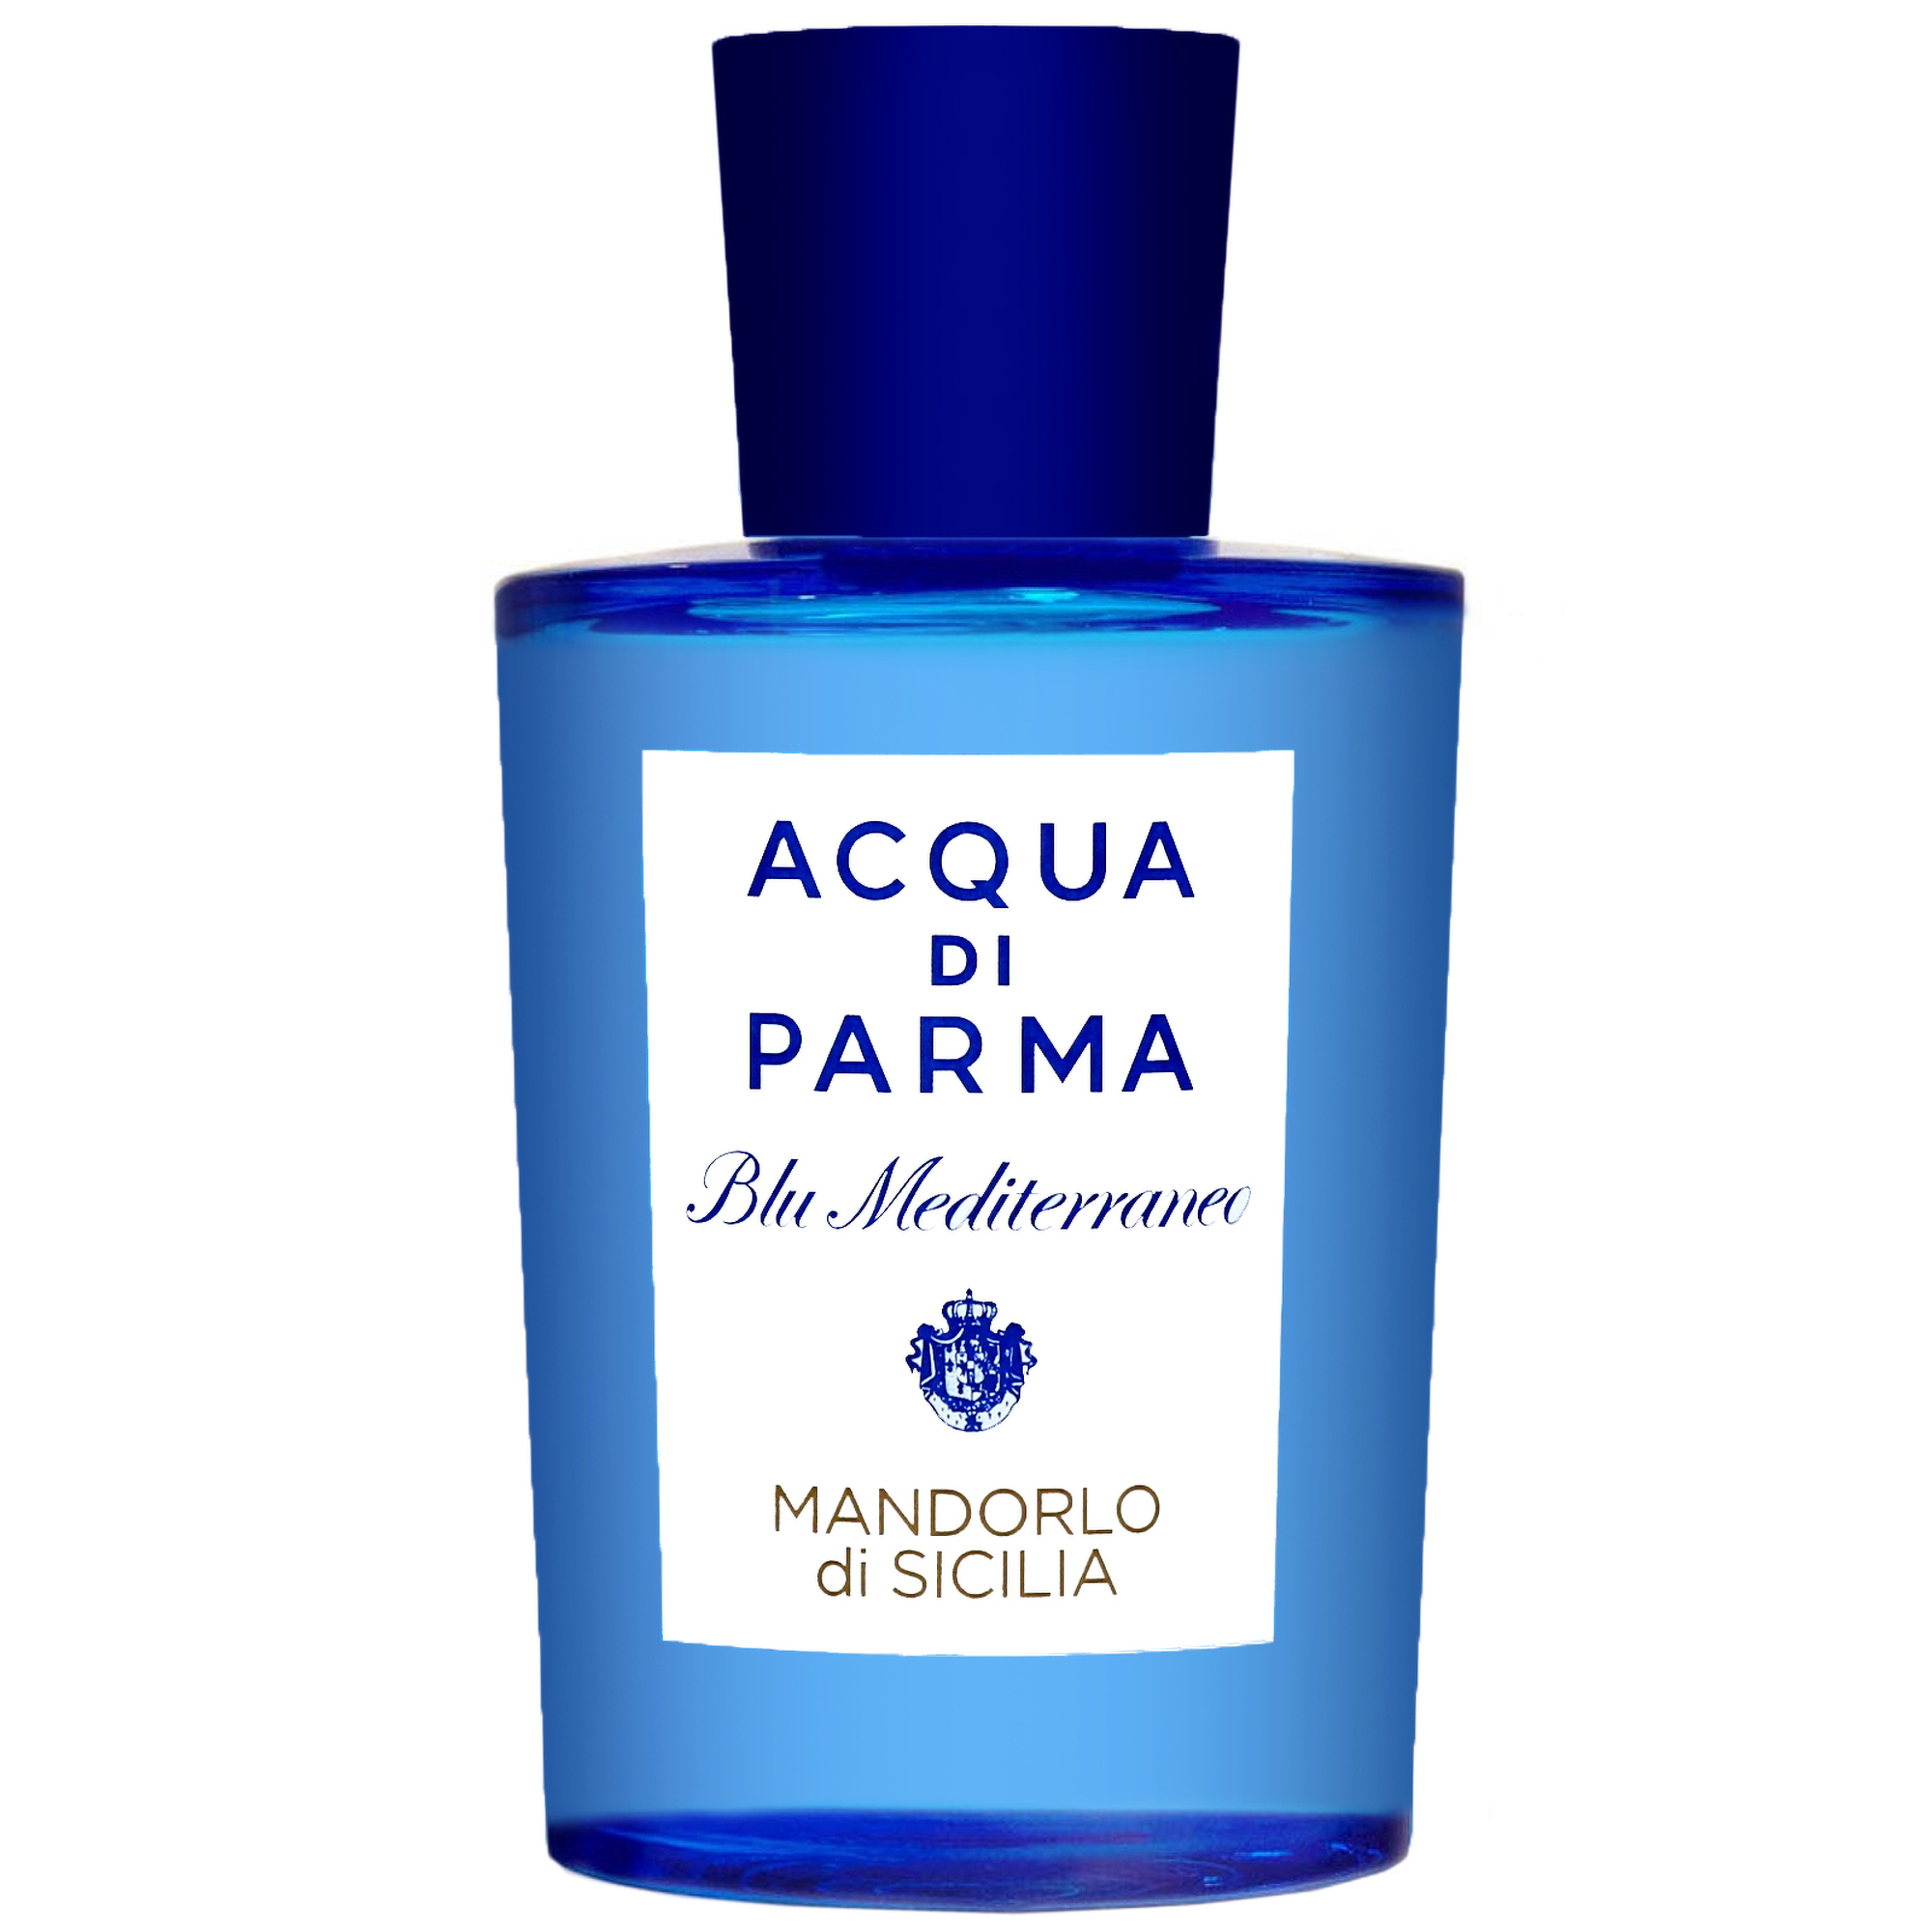 Photos - Women's Fragrance Acqua di Parma Blu Mediterraneo - Mandorlo di Sicilia Eau de Toilette Natu 